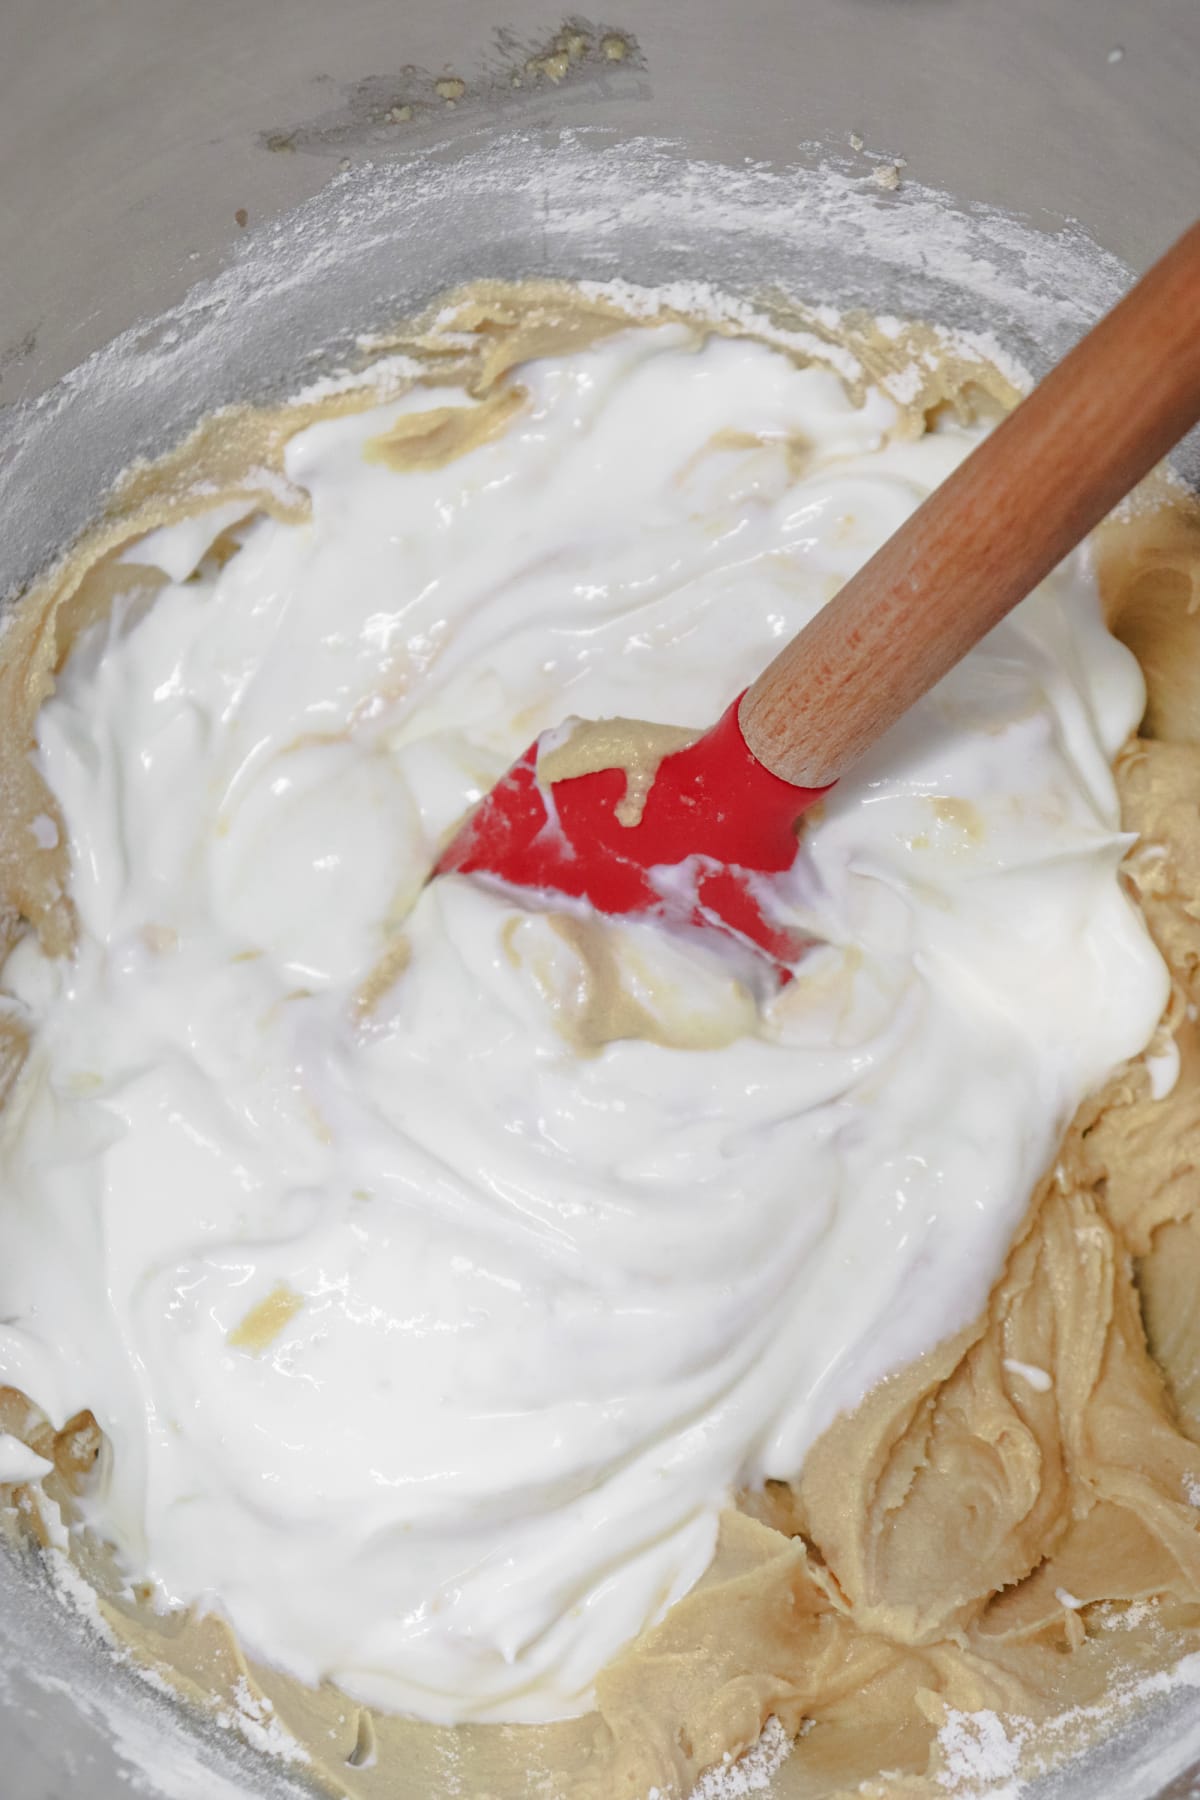 Greek yogurt mixed into coffee cake batter